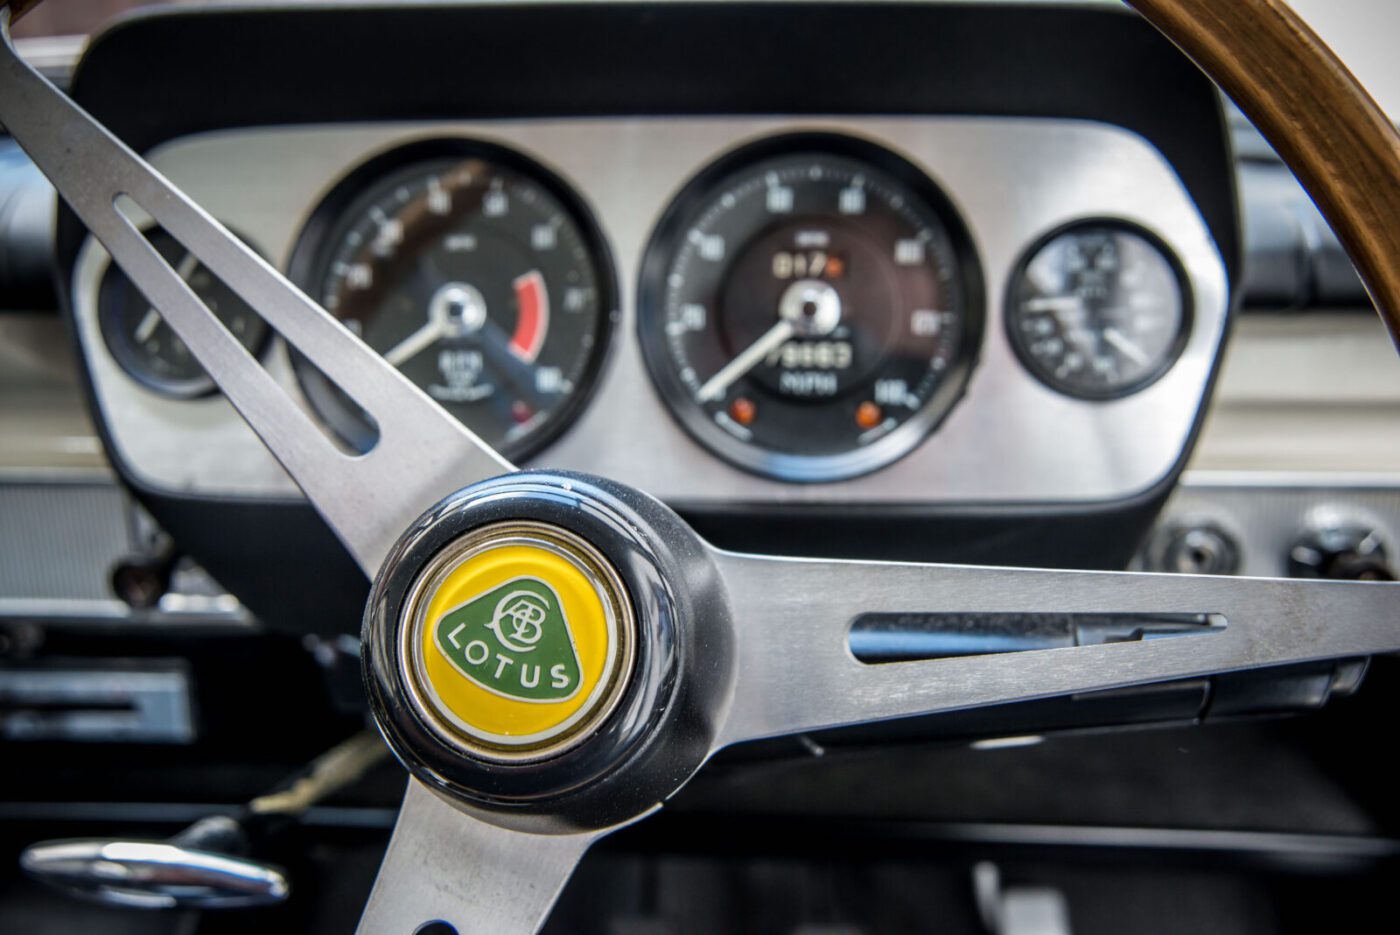 Lotus Cortina steering wheel